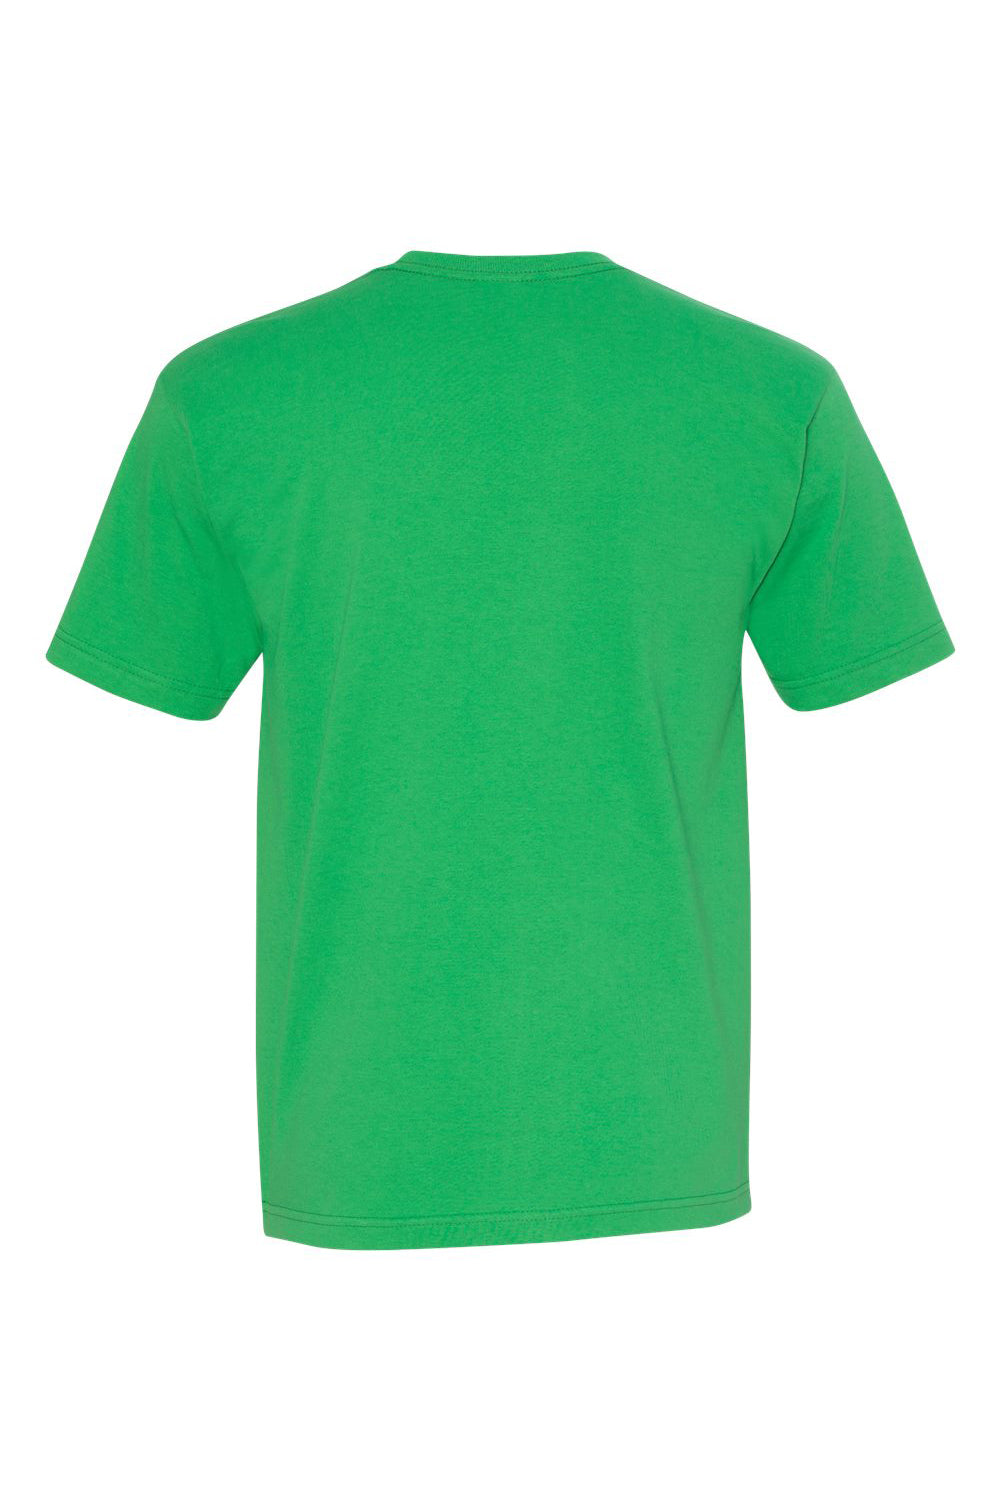 Bayside BA5040 Mens USA Made Short Sleeve Crewneck T-Shirt Irish Kelly Green Flat Back